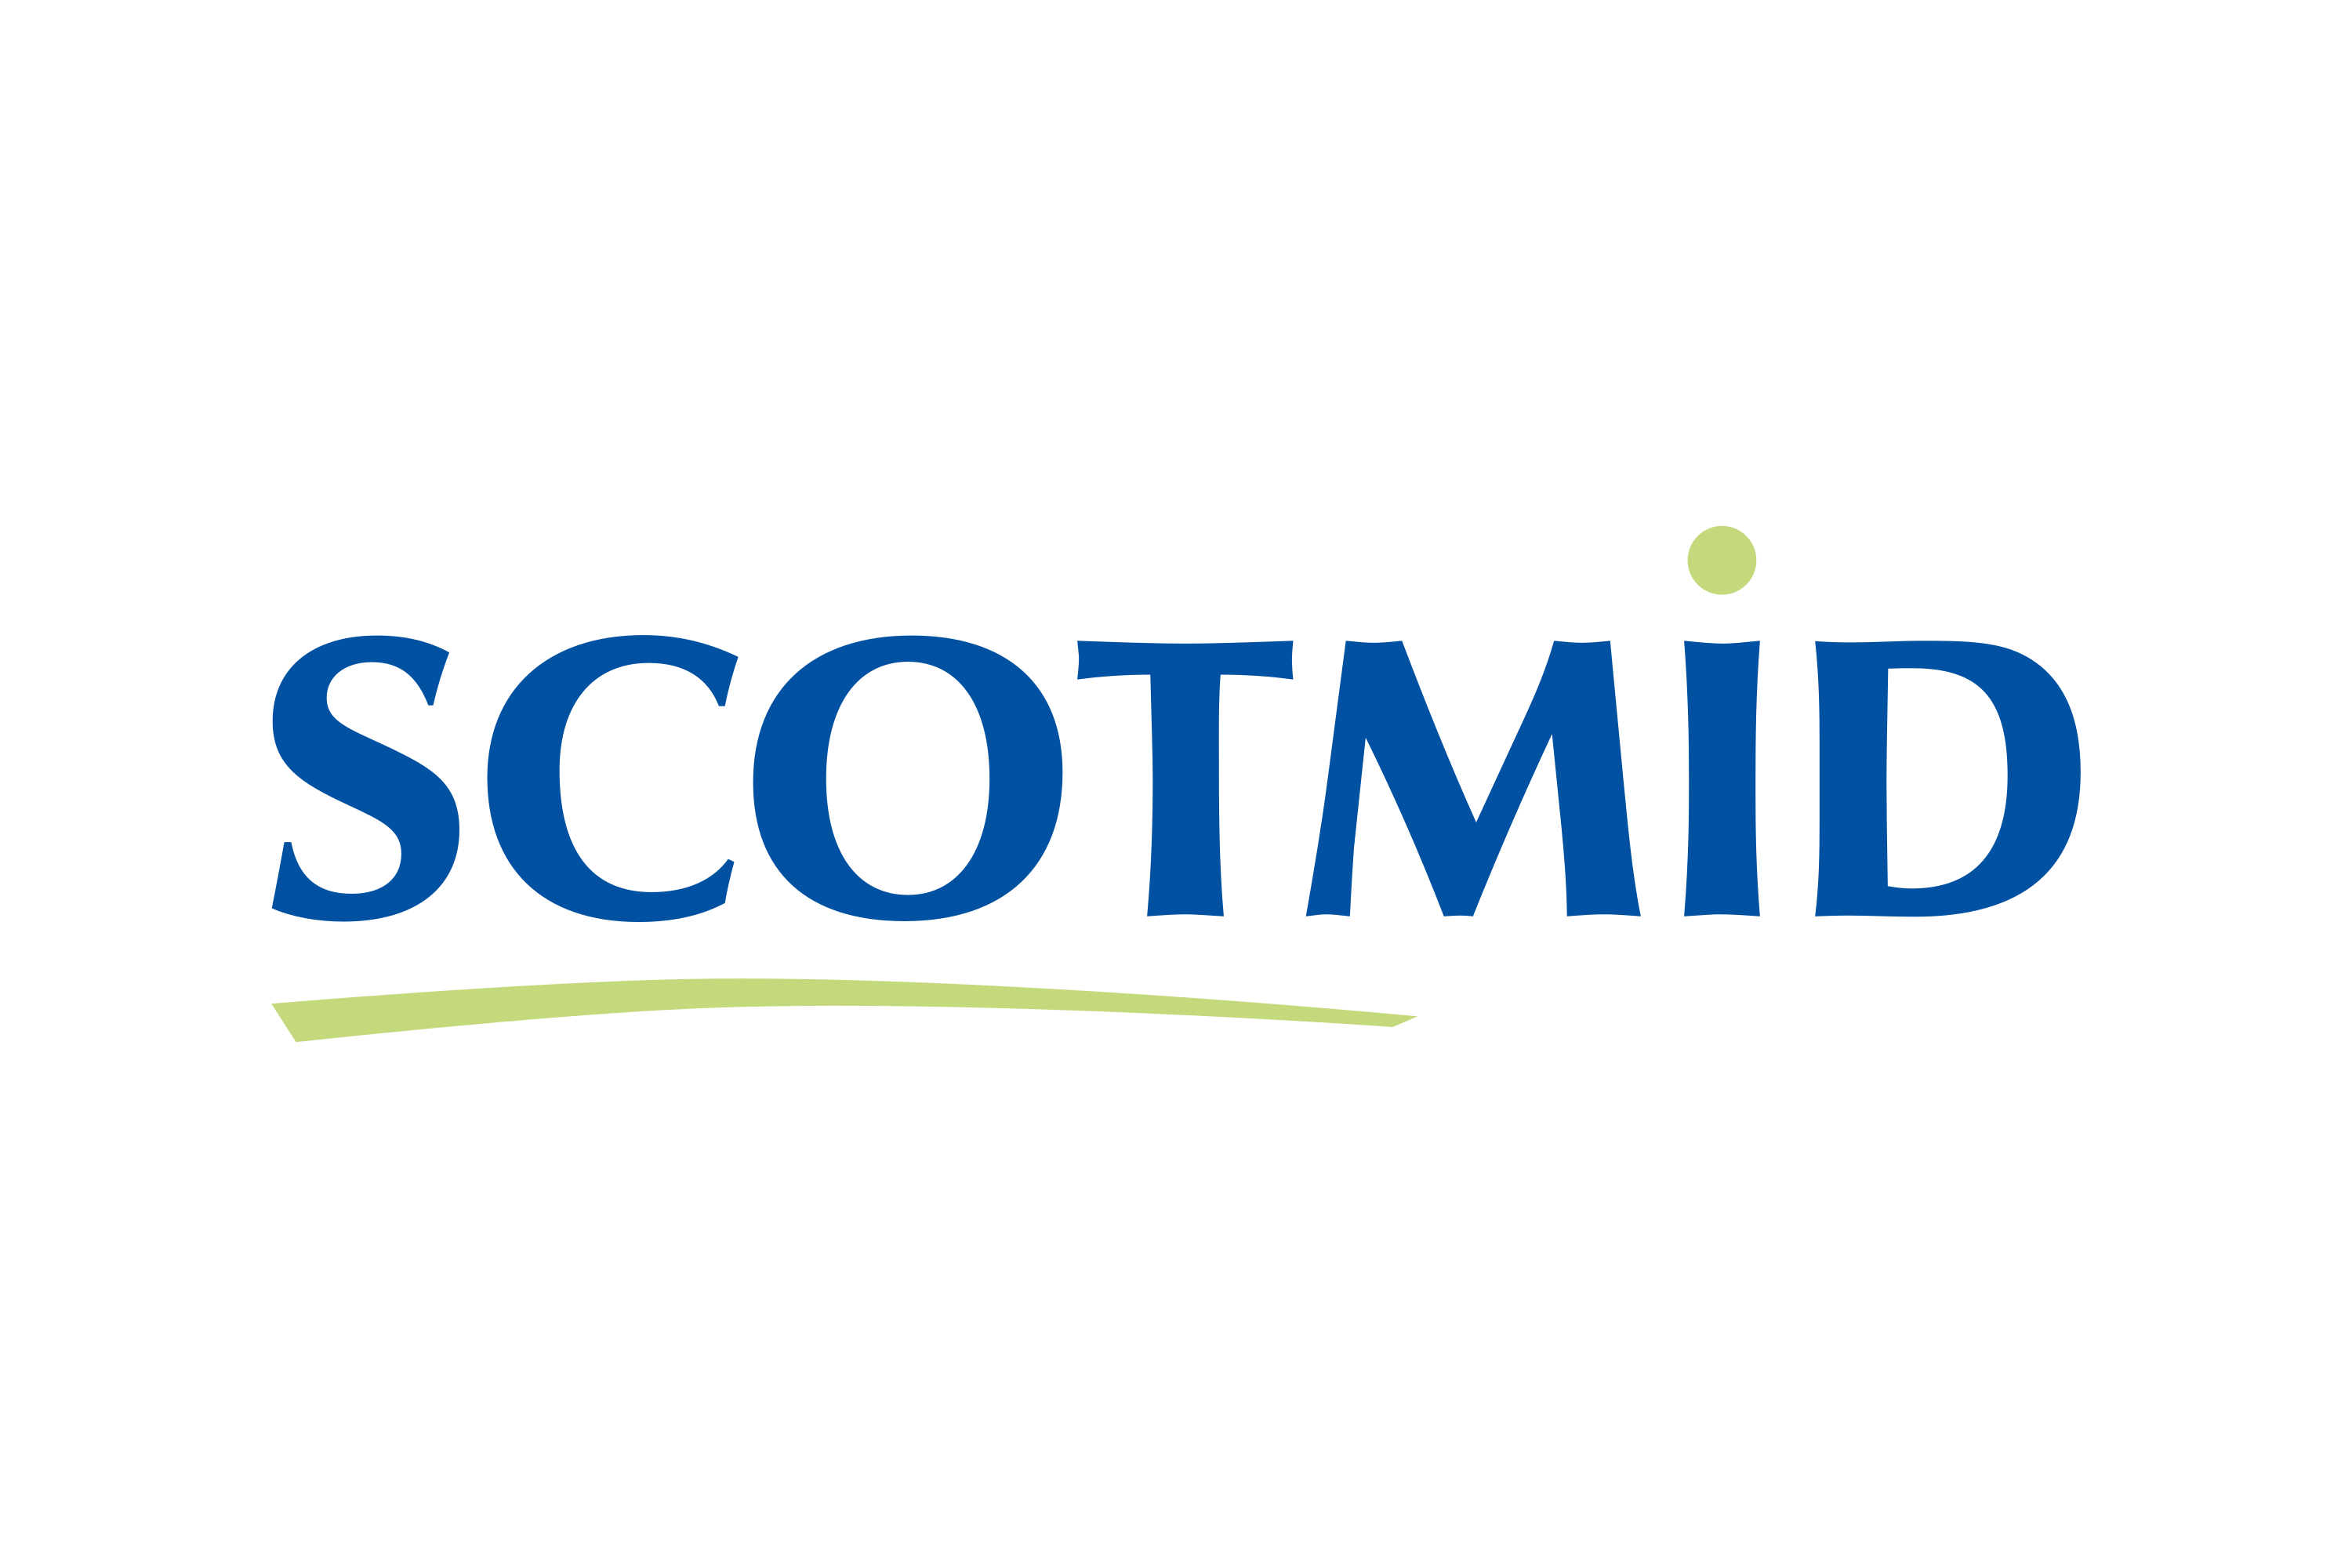 Scotmid Logo